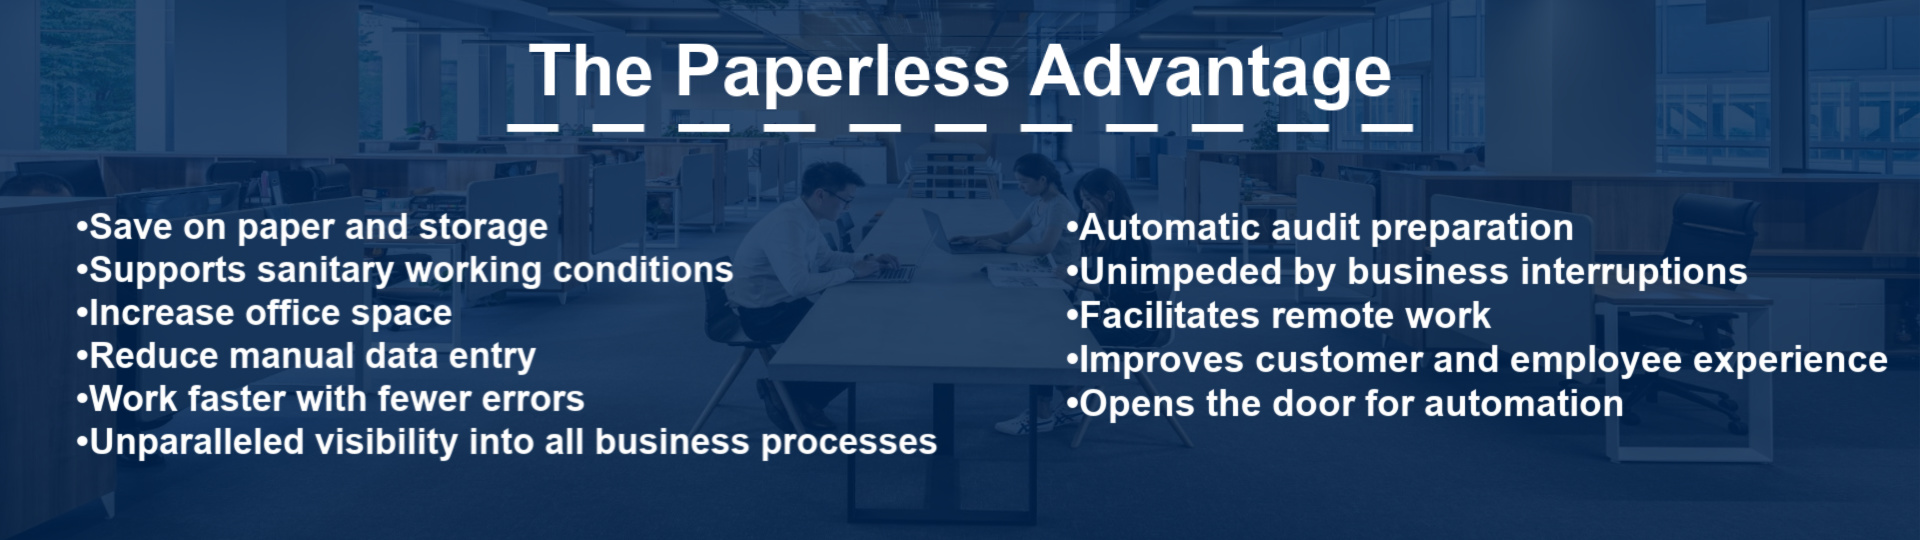 The Paperless Advantage